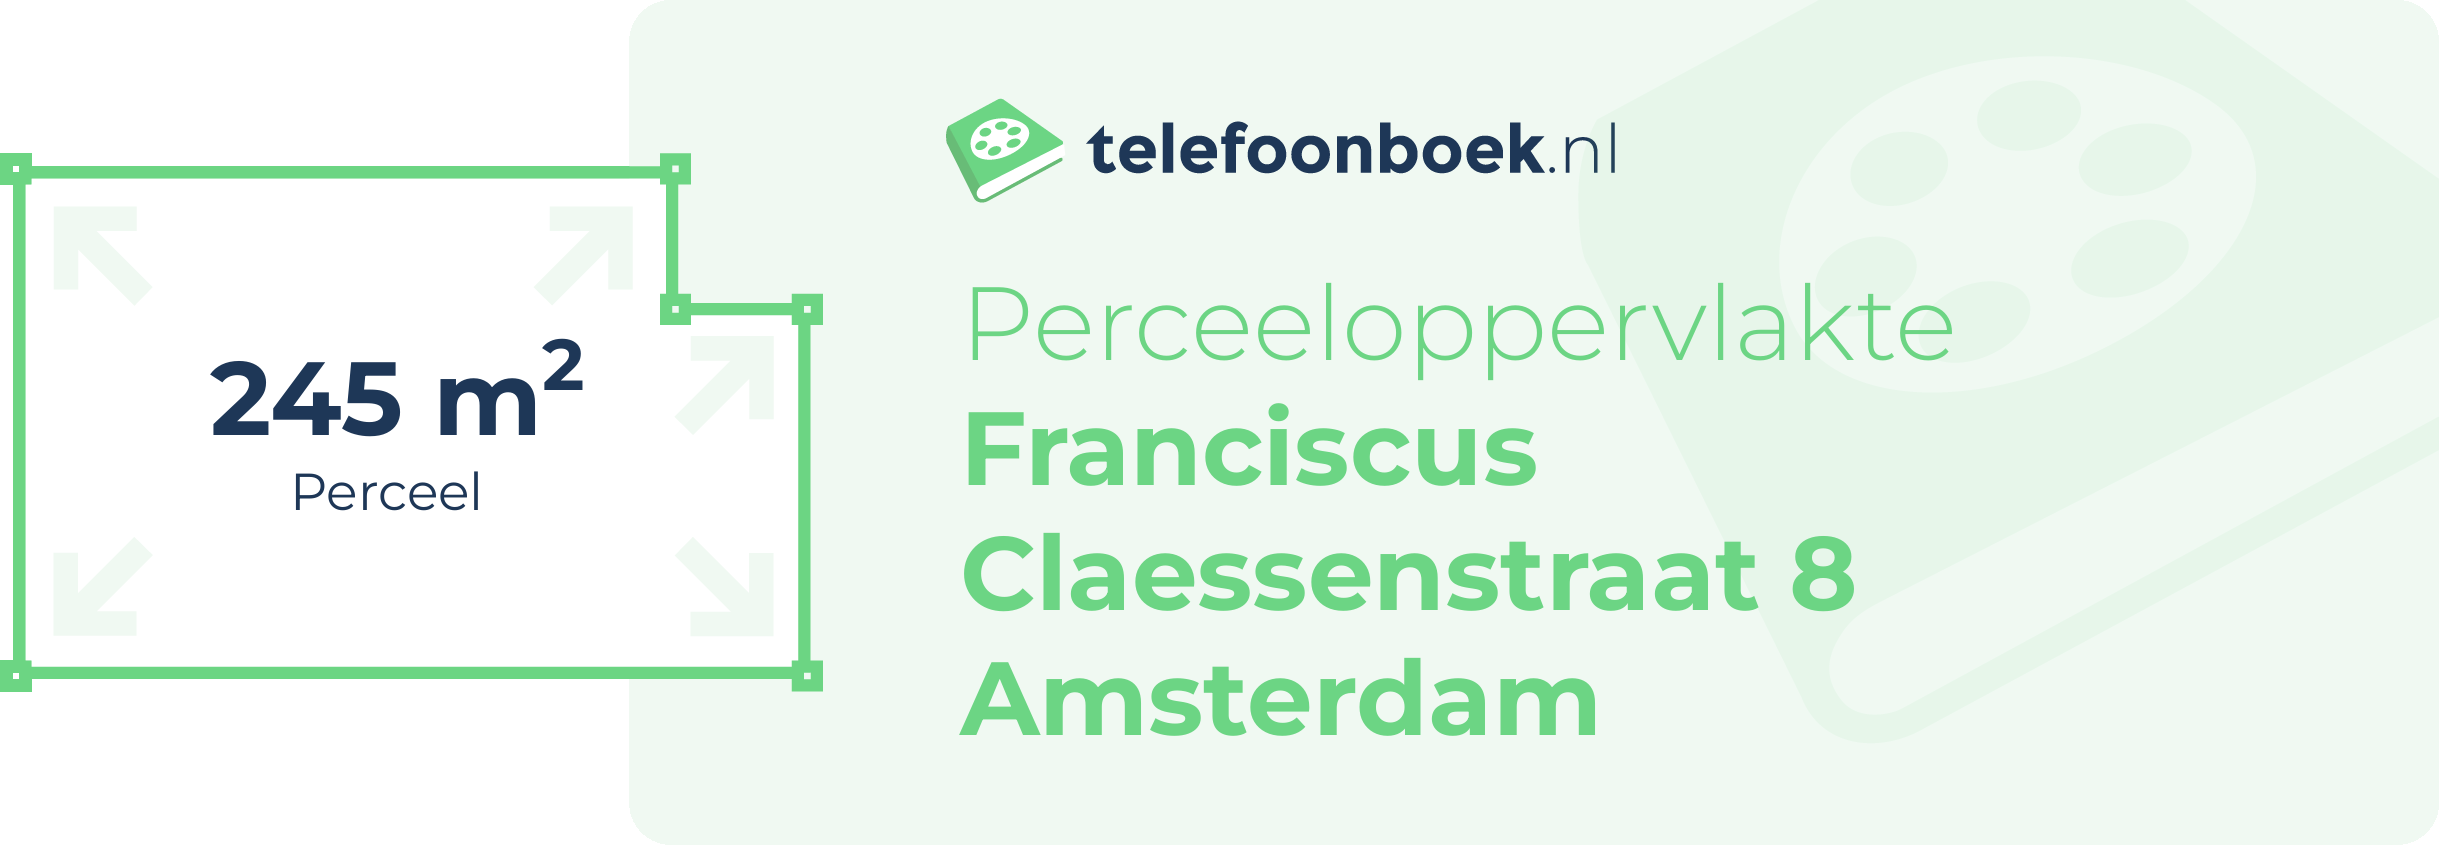 Perceeloppervlakte Franciscus Claessenstraat 8 Amsterdam